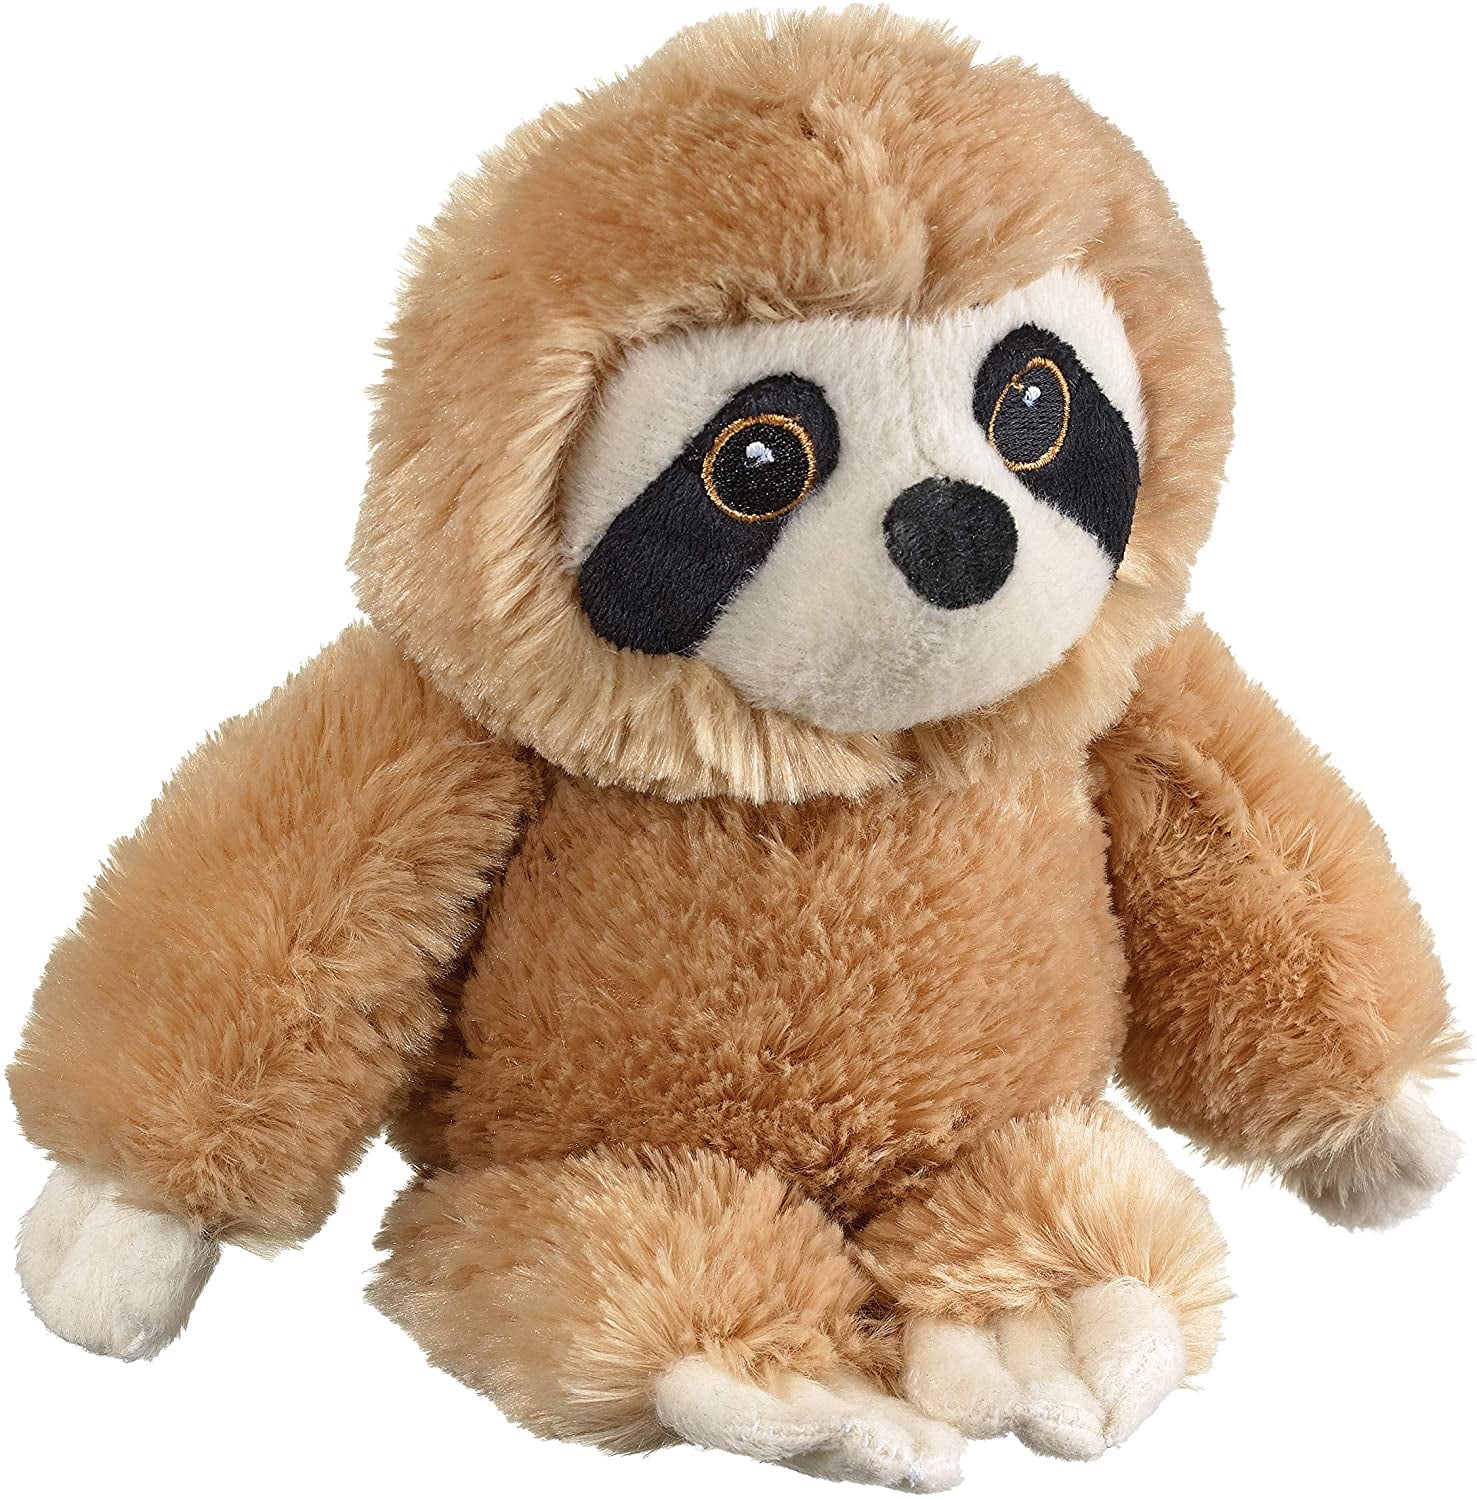 Eco Pals Sloth 8" by Wildlife Artists Eco-Friendly Stuffed Animal Plush Toy, 